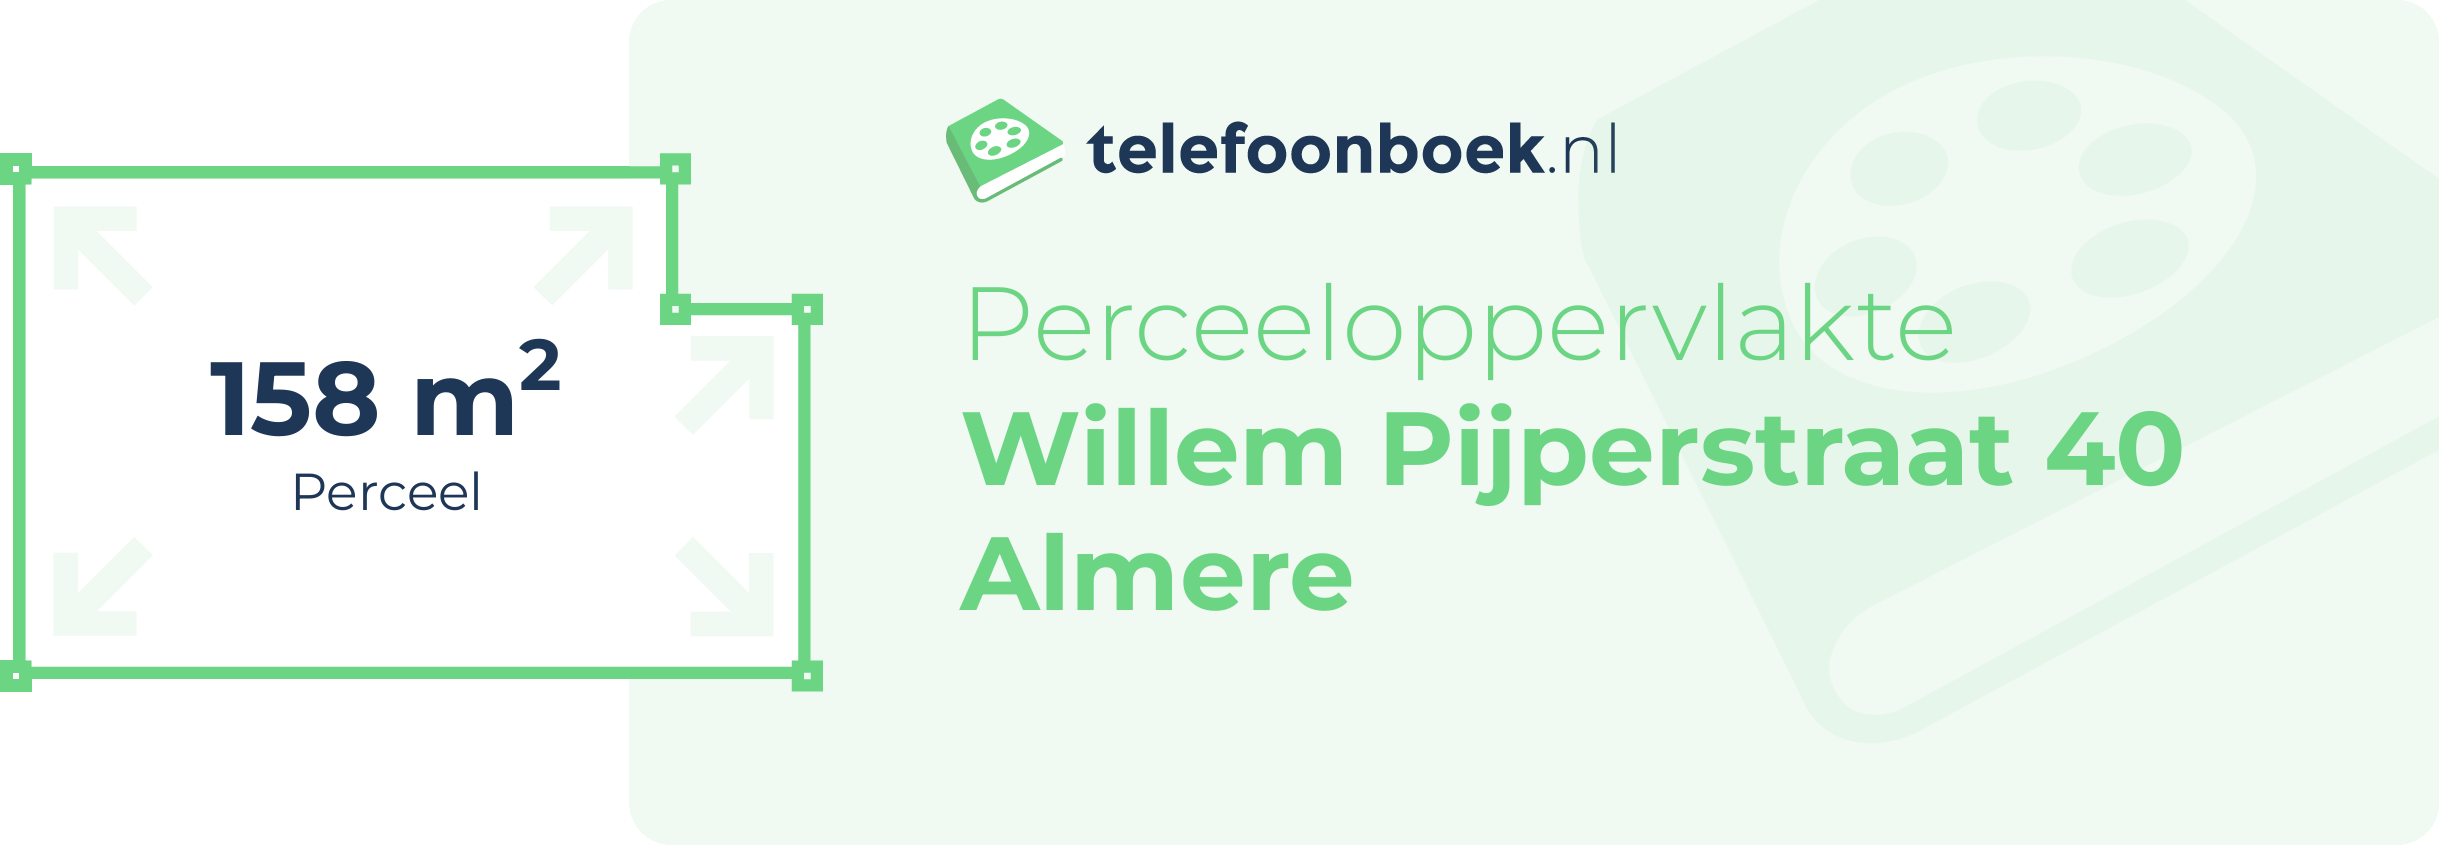 Perceeloppervlakte Willem Pijperstraat 40 Almere